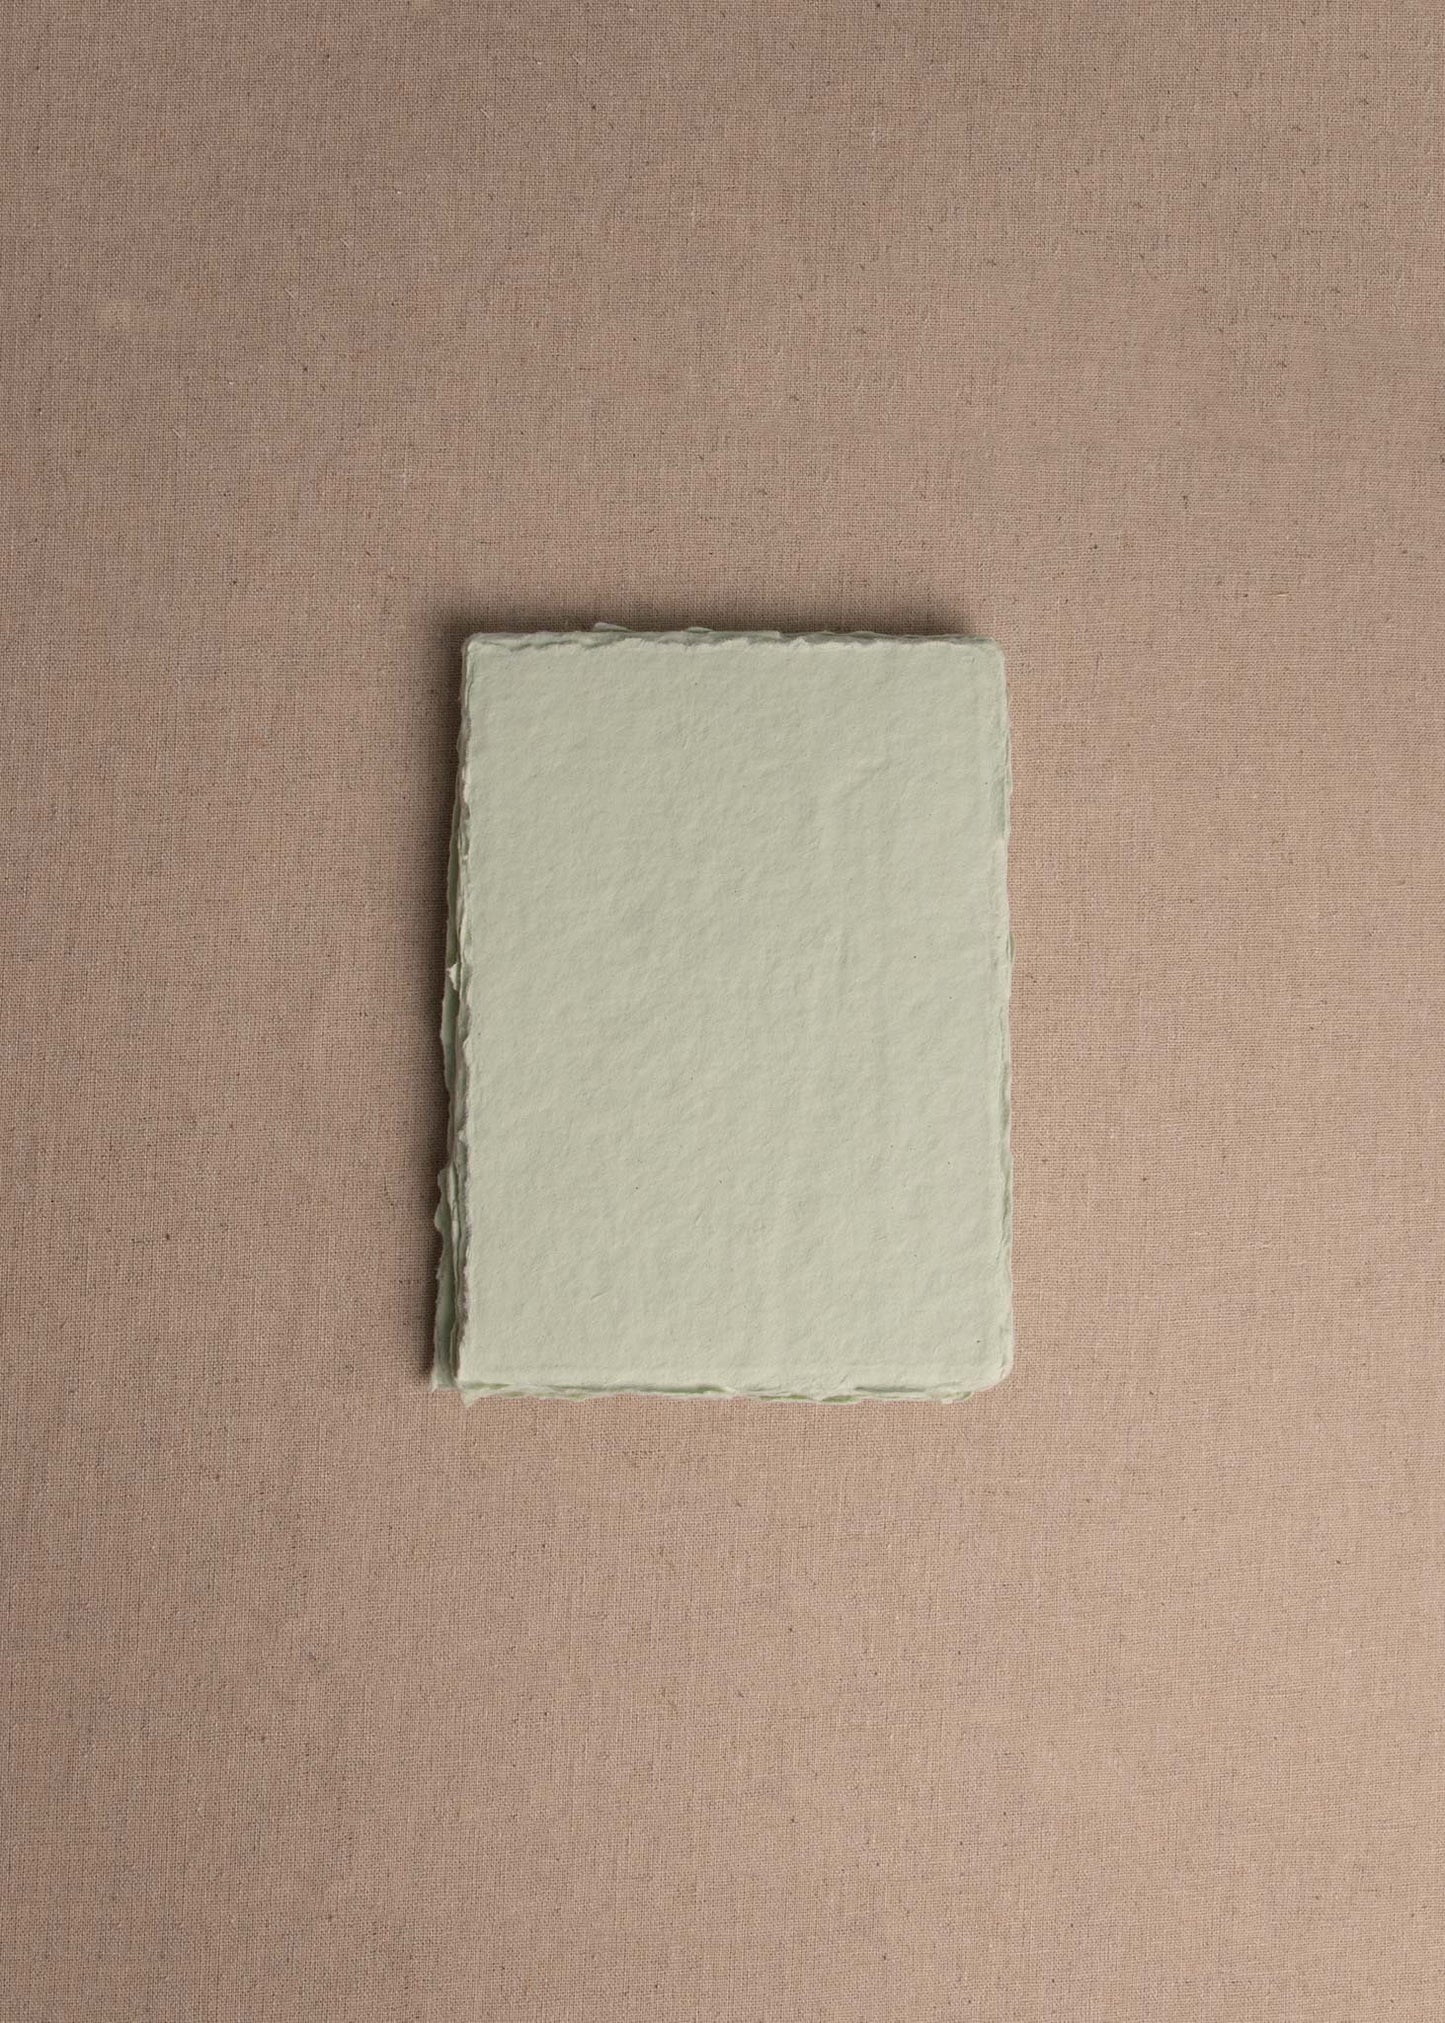 Singular 5x7 Mint Green Handmade paper with deckle edge on linen background